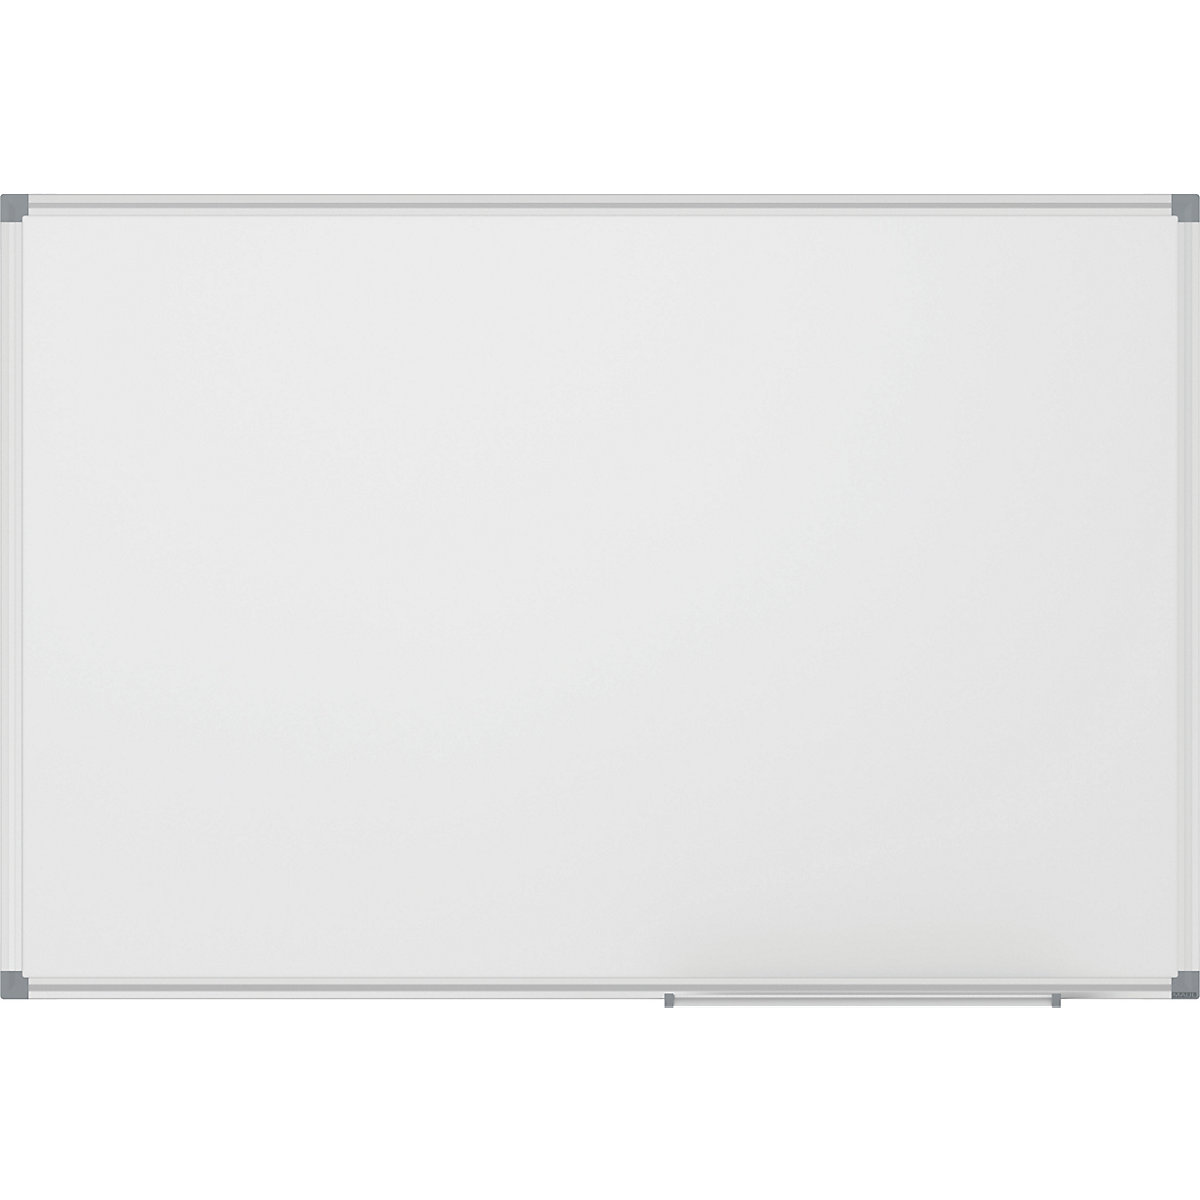 Panel rotulable MAULstandard, blanco – MAUL